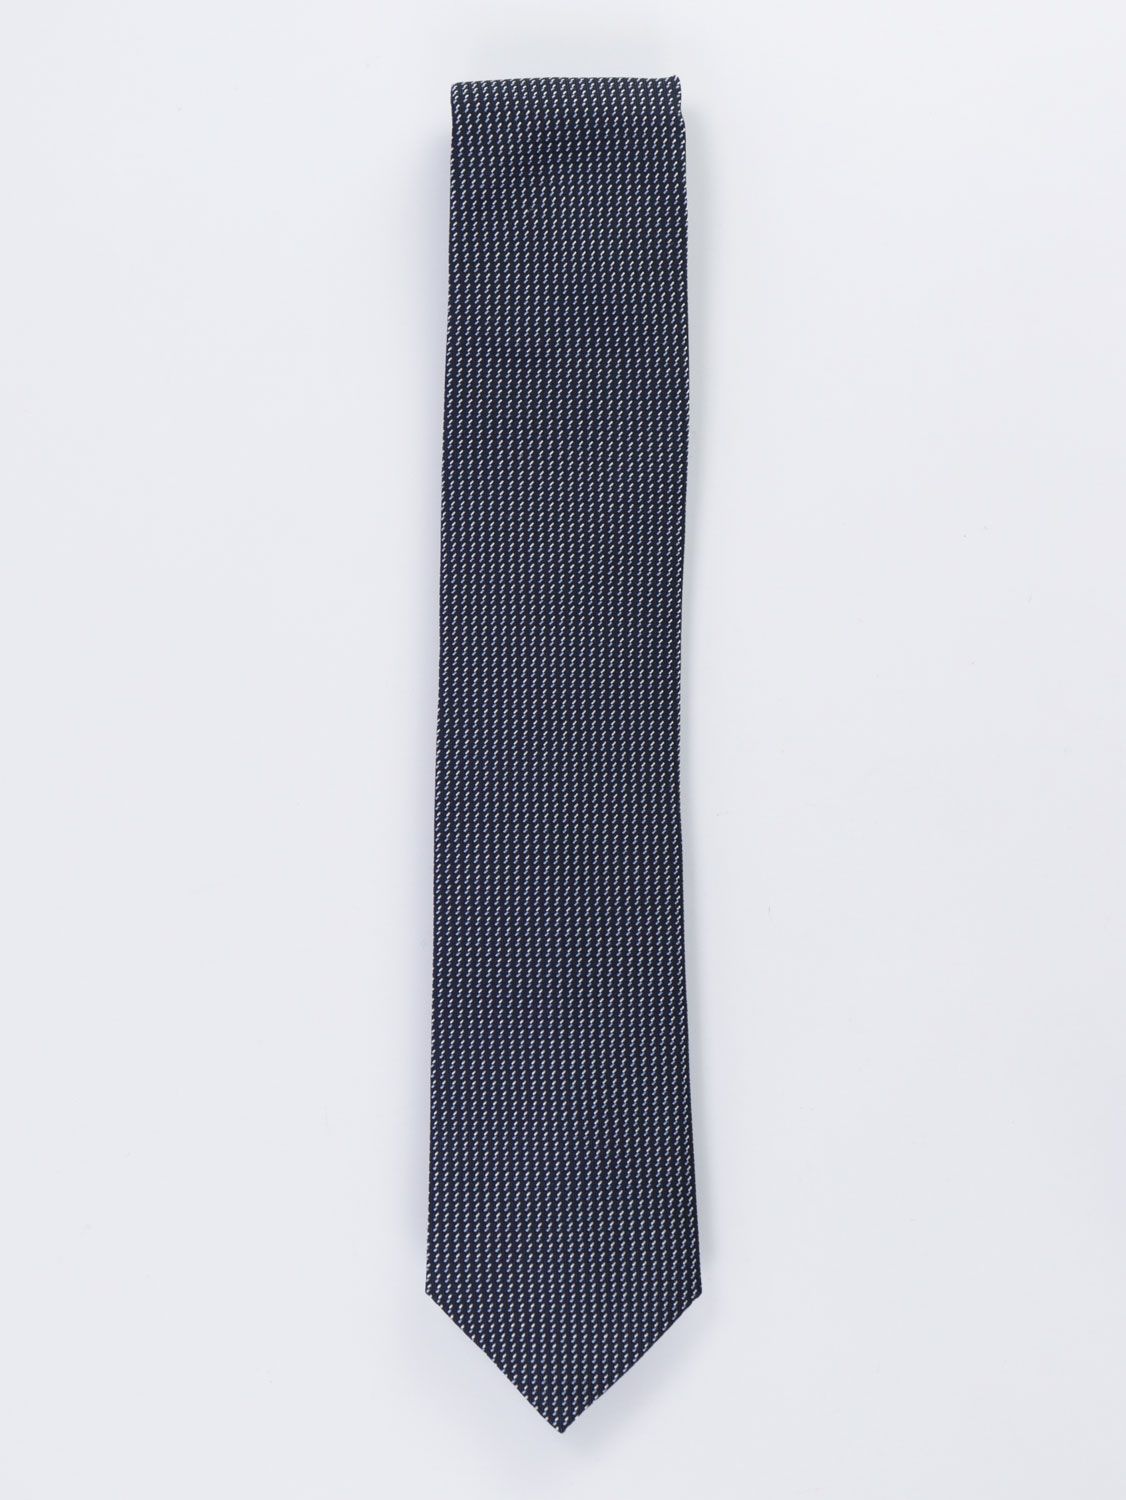 Null Zegna - Cravate - Ermenegildo Zegna, Italie, 100% soie, design probablement&hellip;